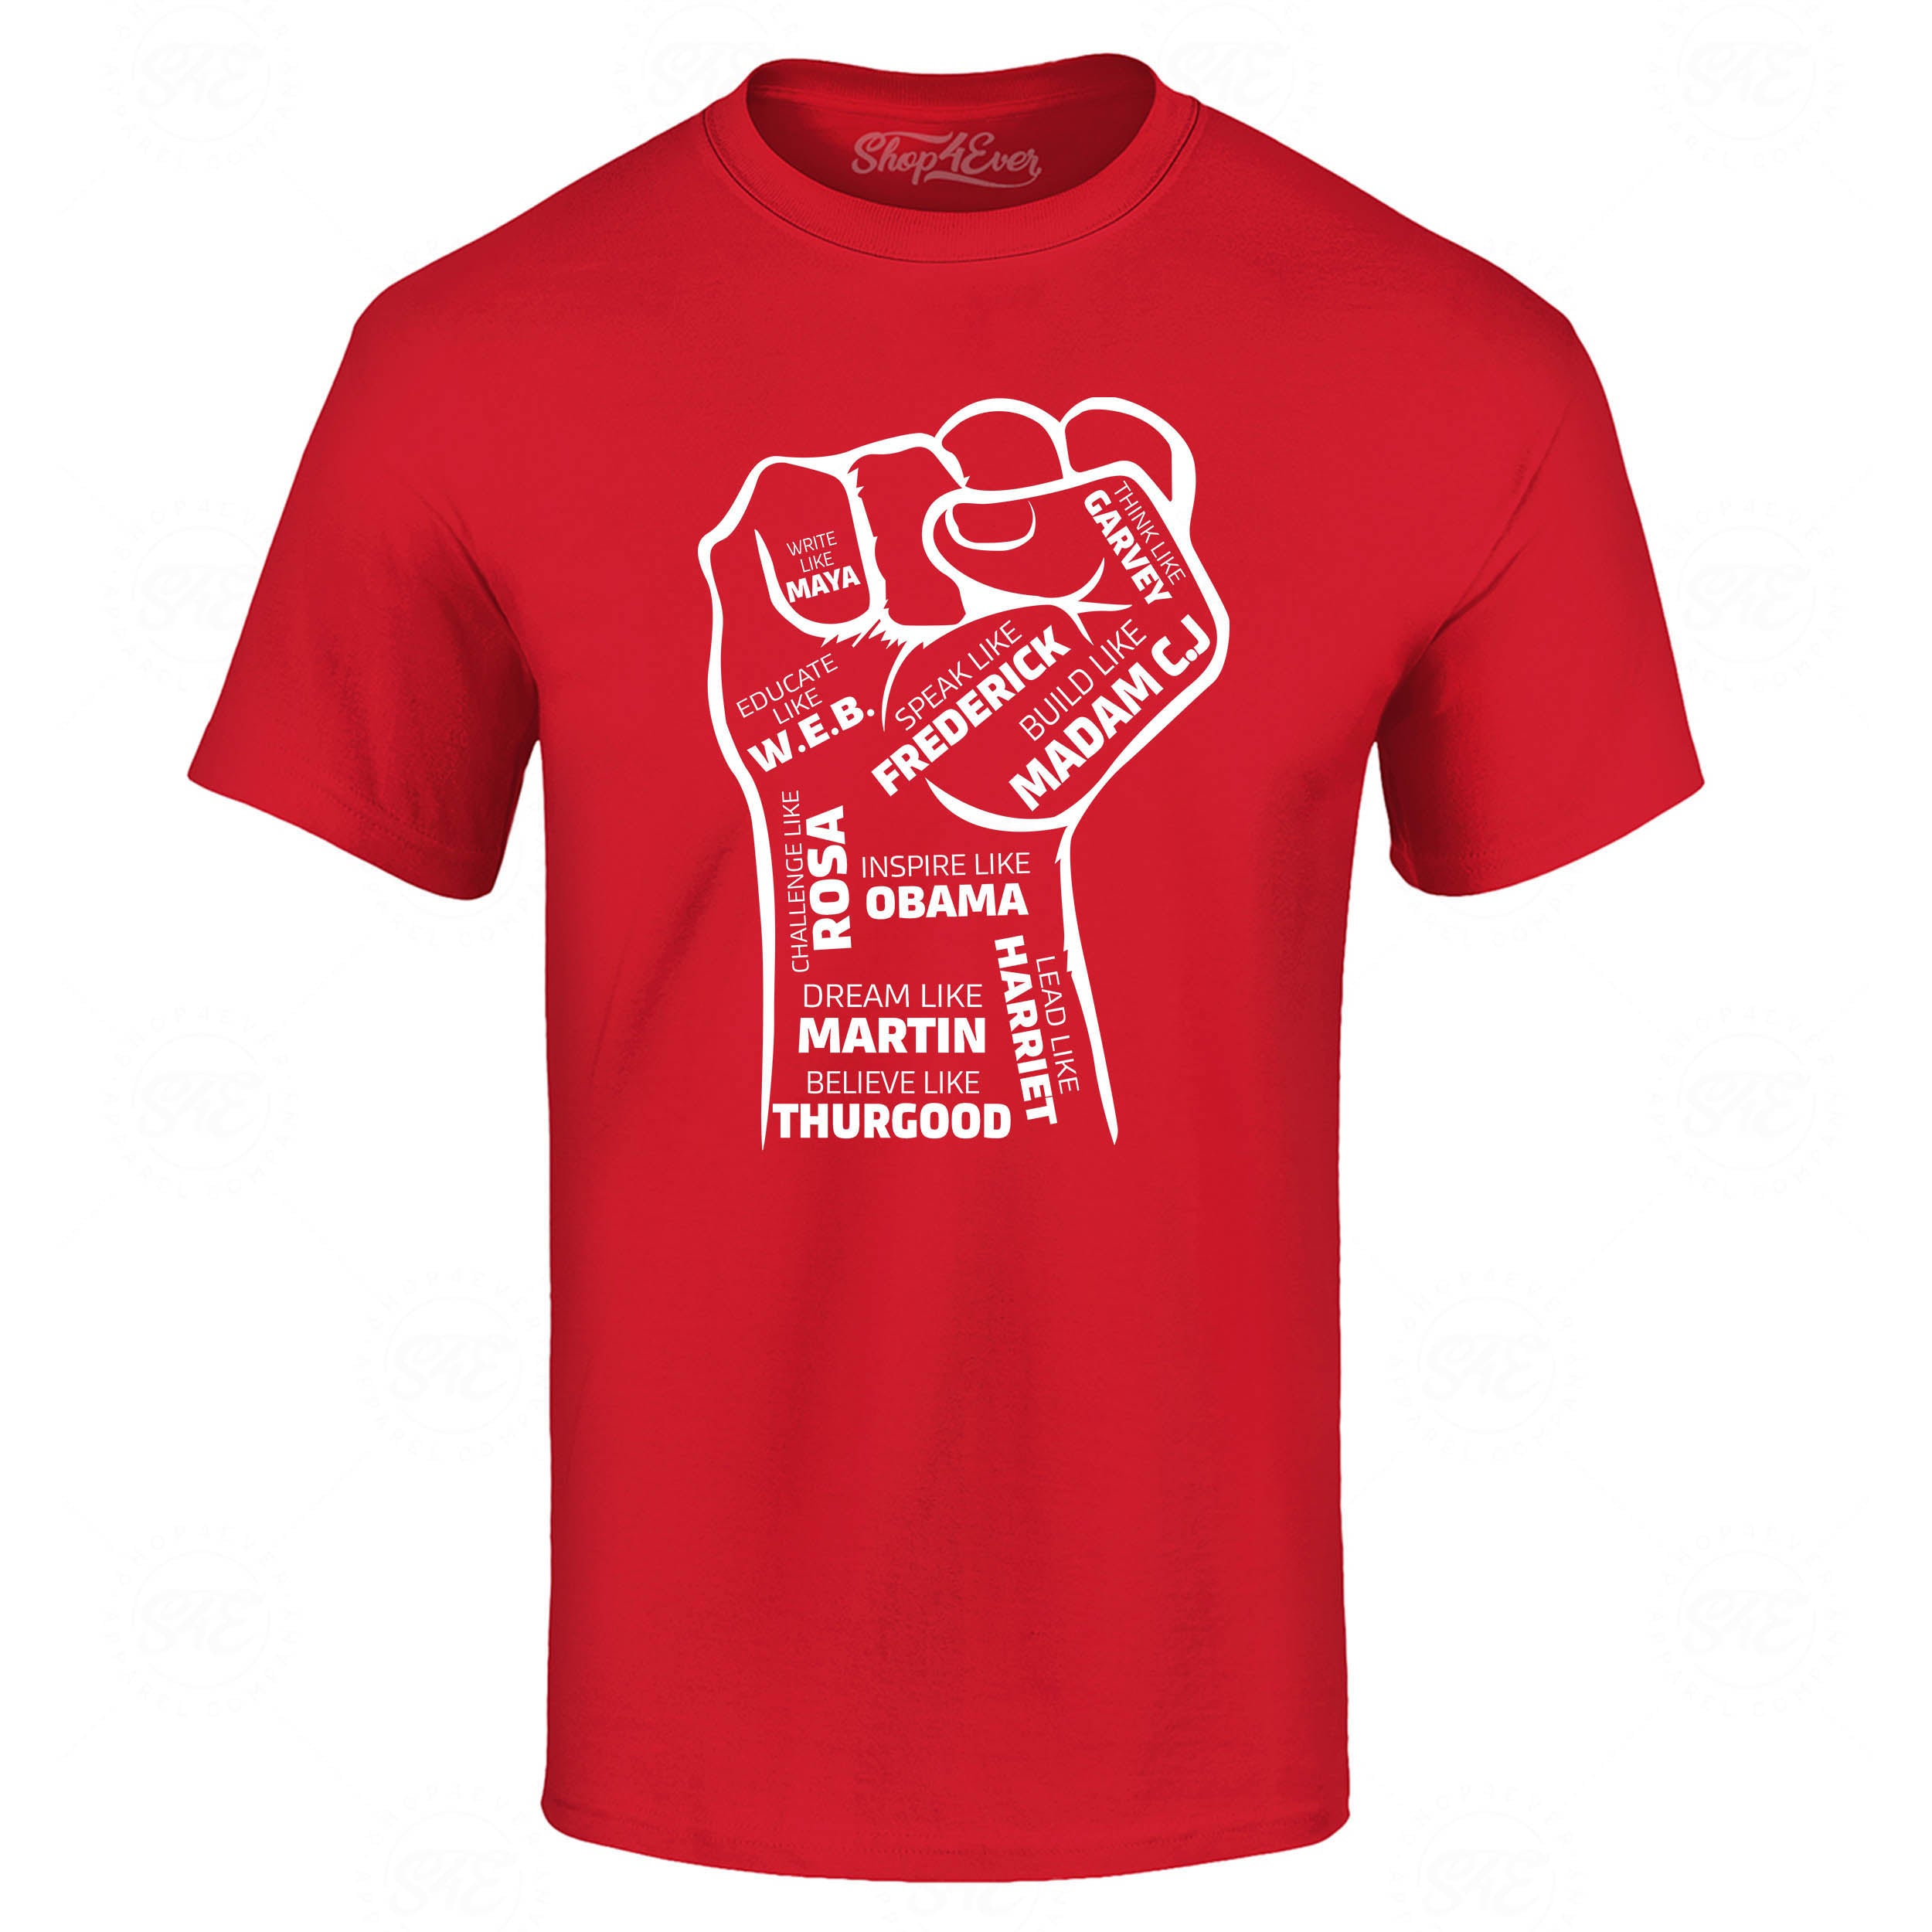 Inspiring Black Leaders Fist T-Shirt